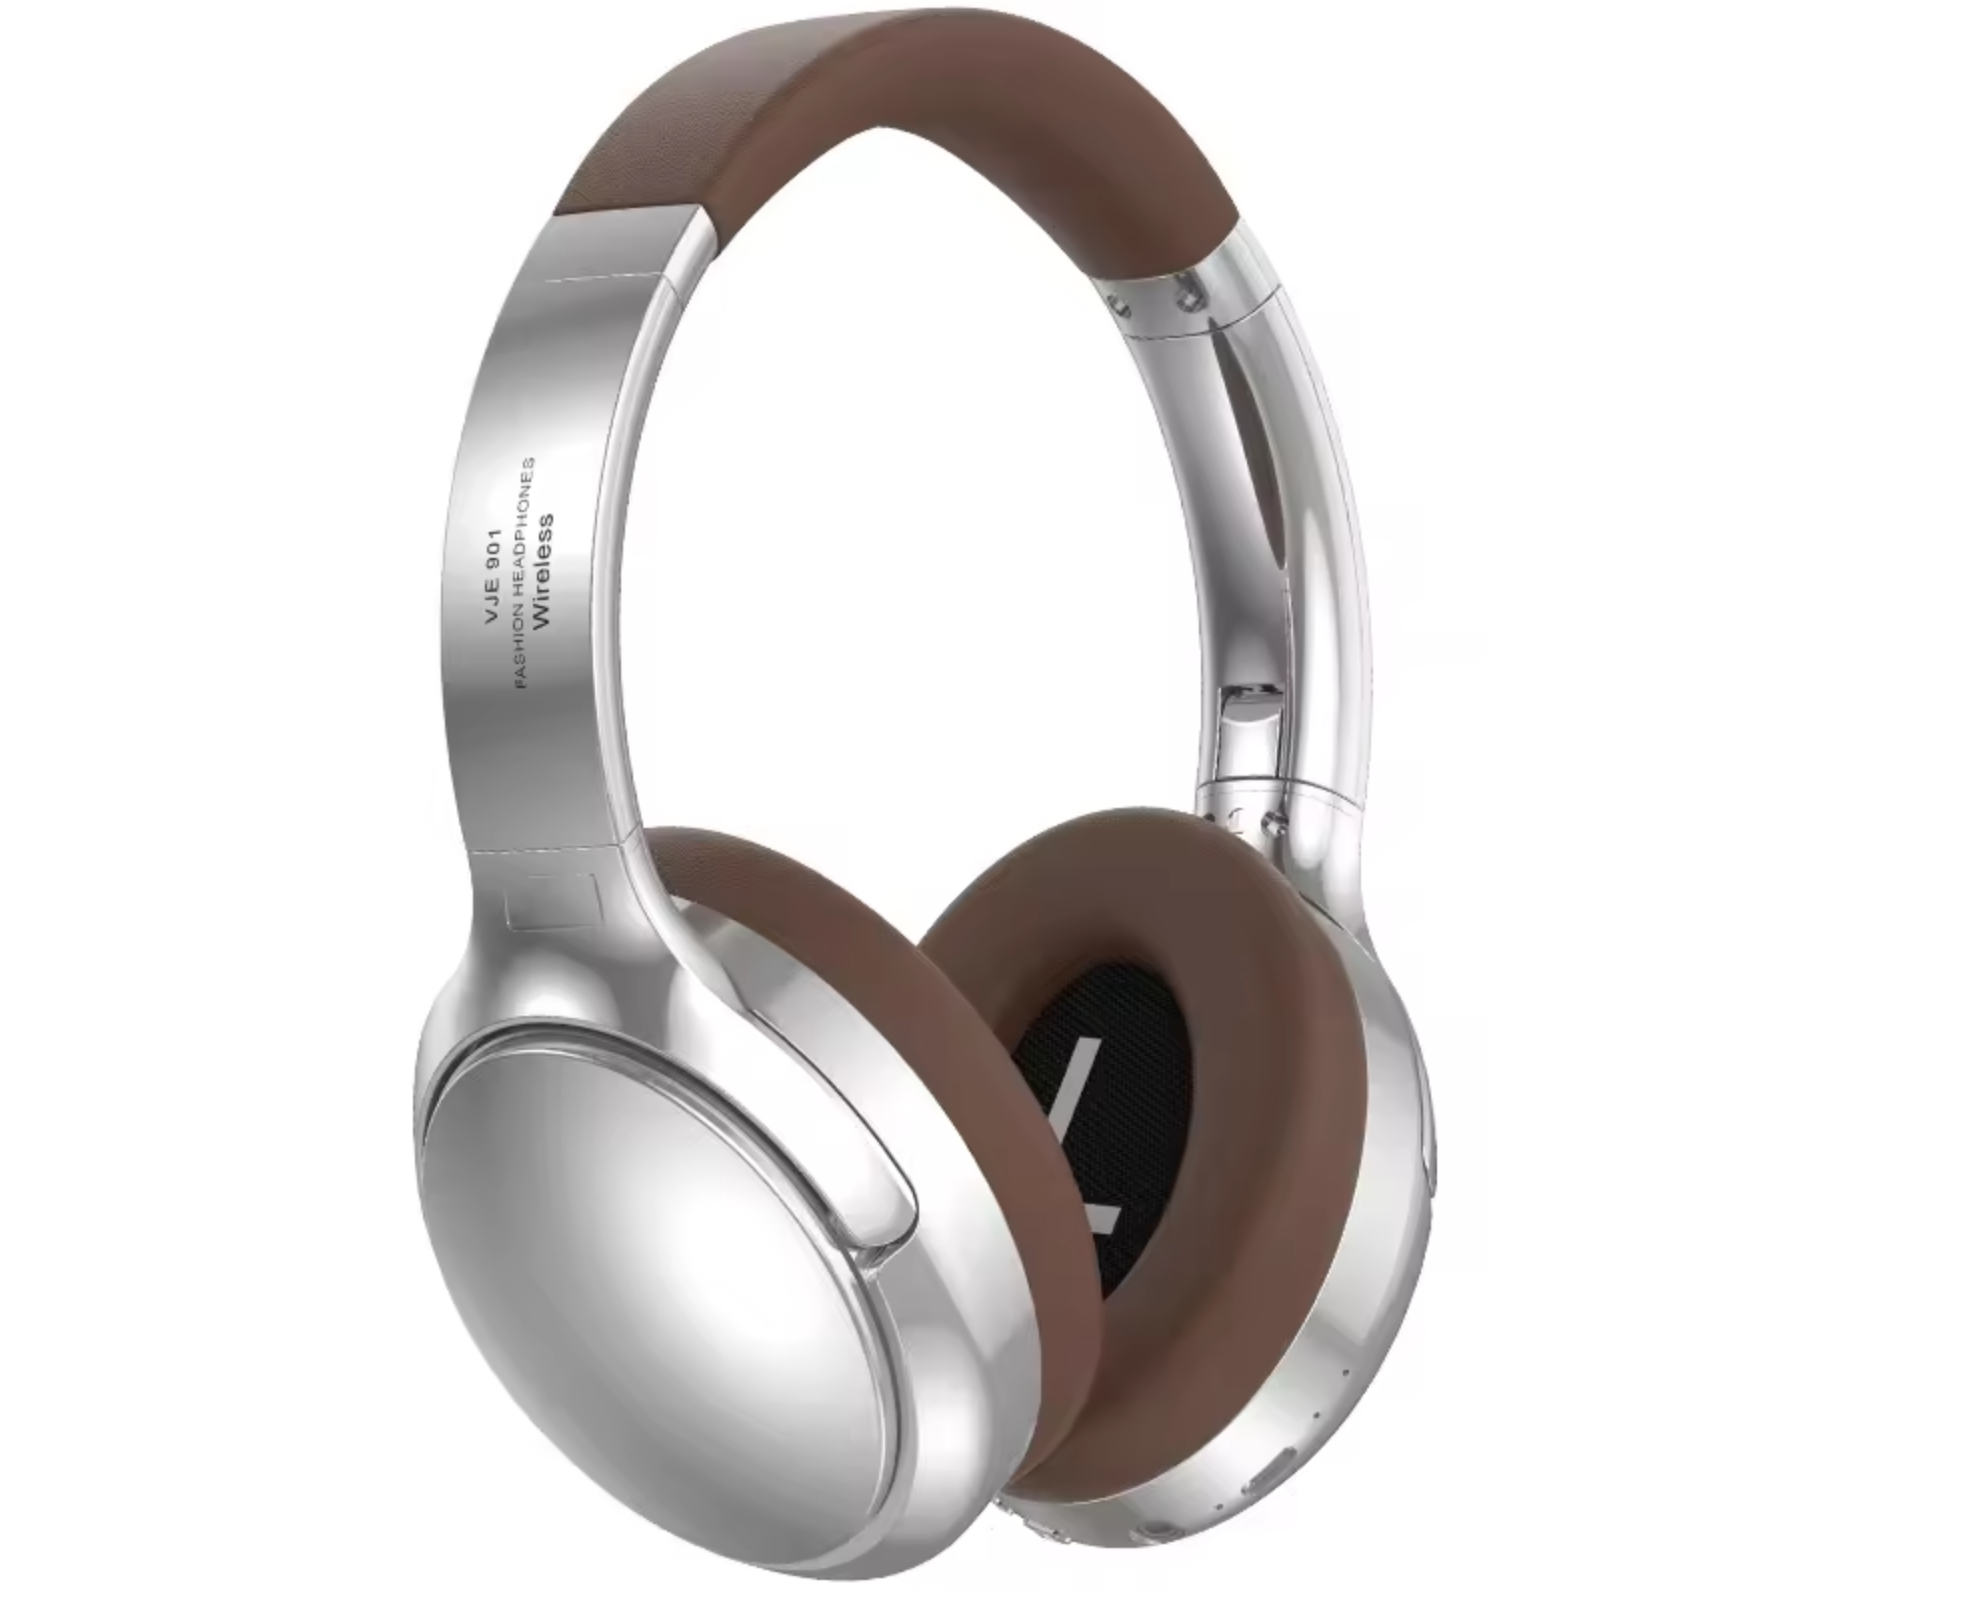 Metallic black silver headset stereo sound wireless headphone